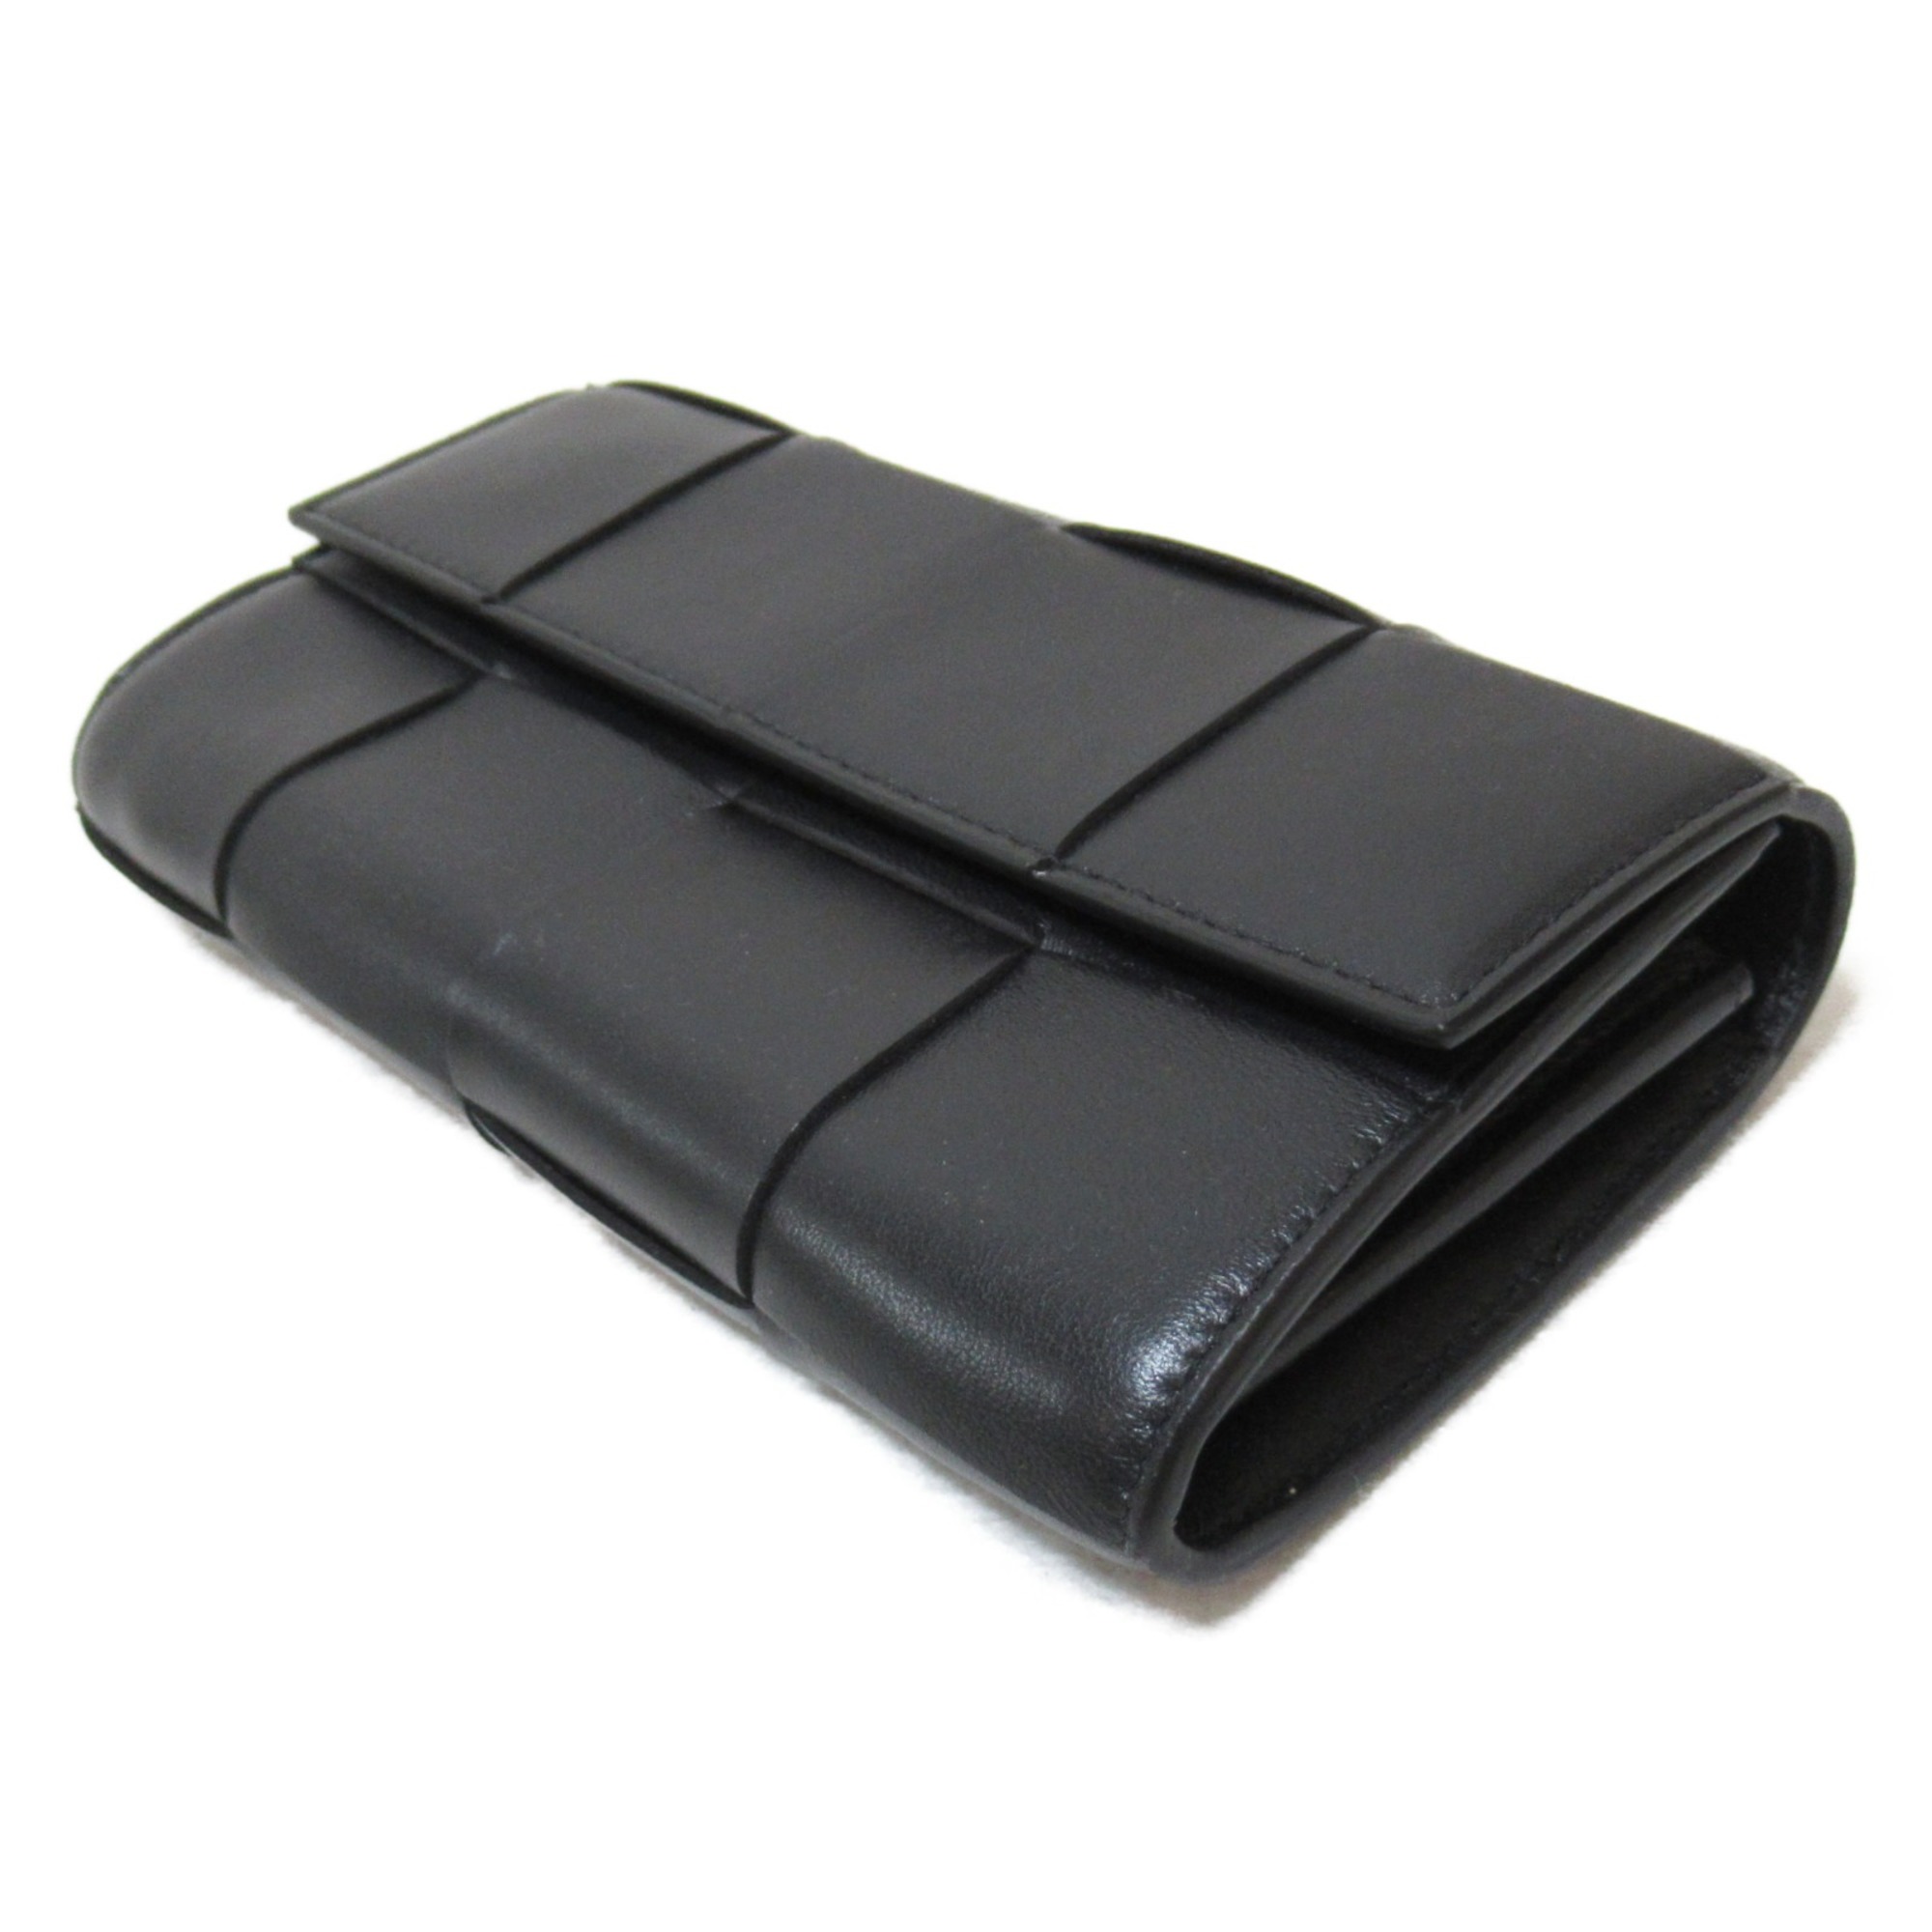 BOTTEGA VENETA Flap wallet Black leather 667433VCQC48425